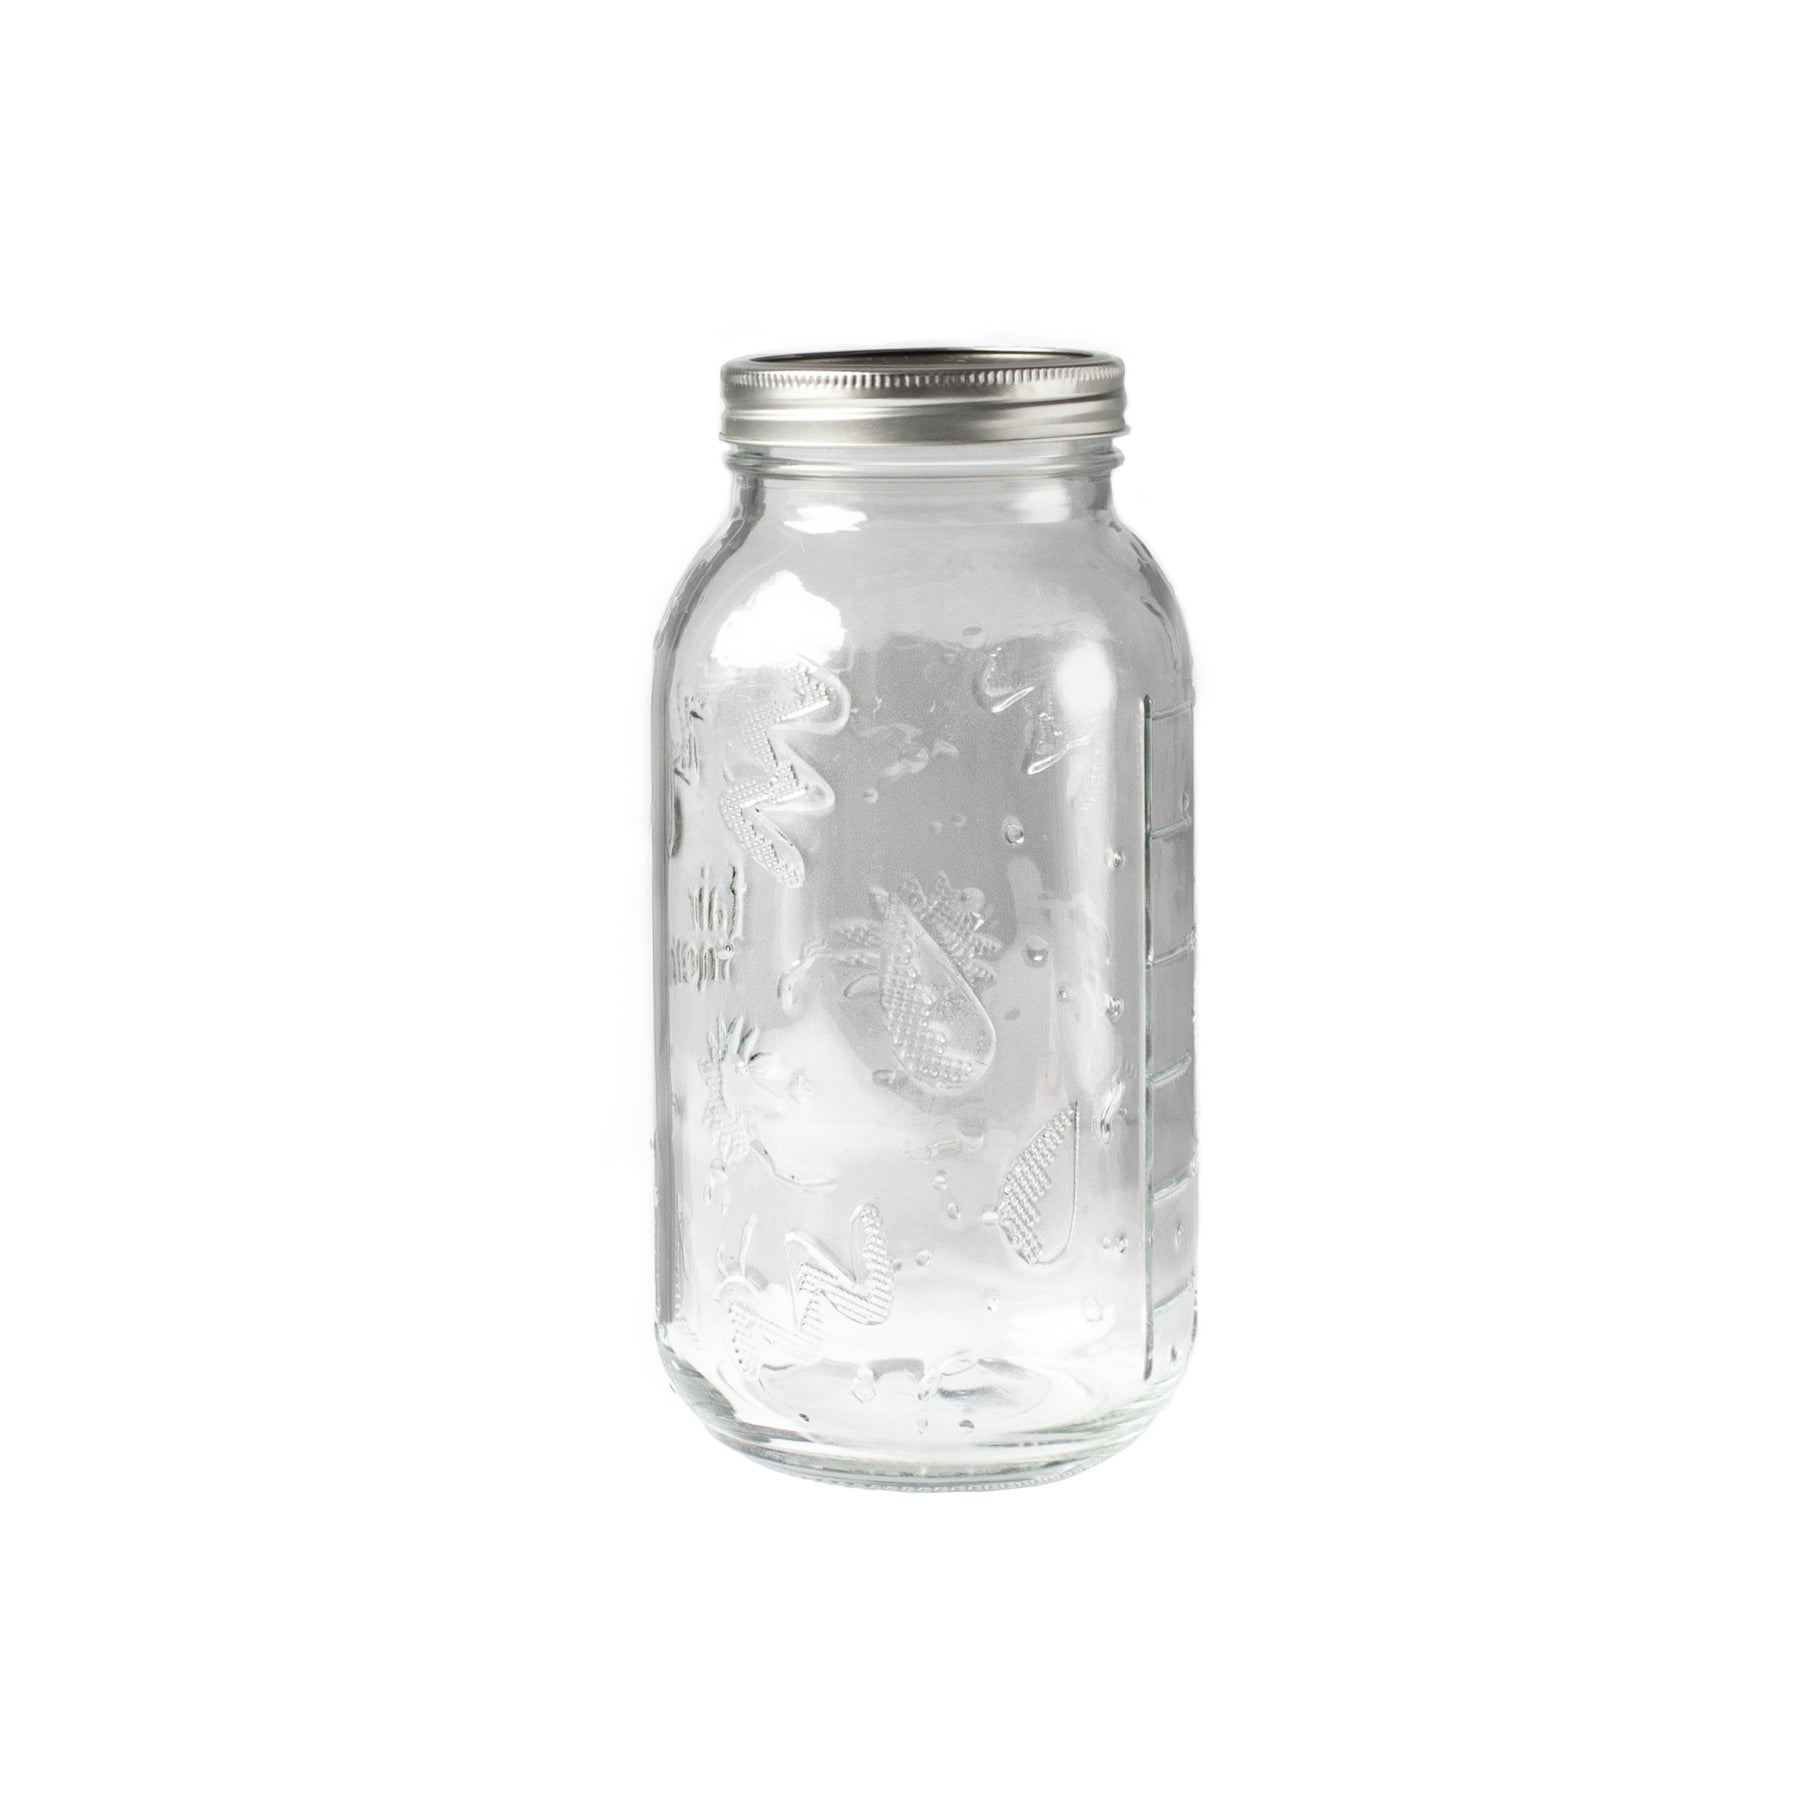 Fermentationsglas (64 oz) I Einlegen lebensmittelecht, Fairment I Rostfrei, etc zum spülmaschinenecht I Fermentieren, Einmachglas Mason Jar